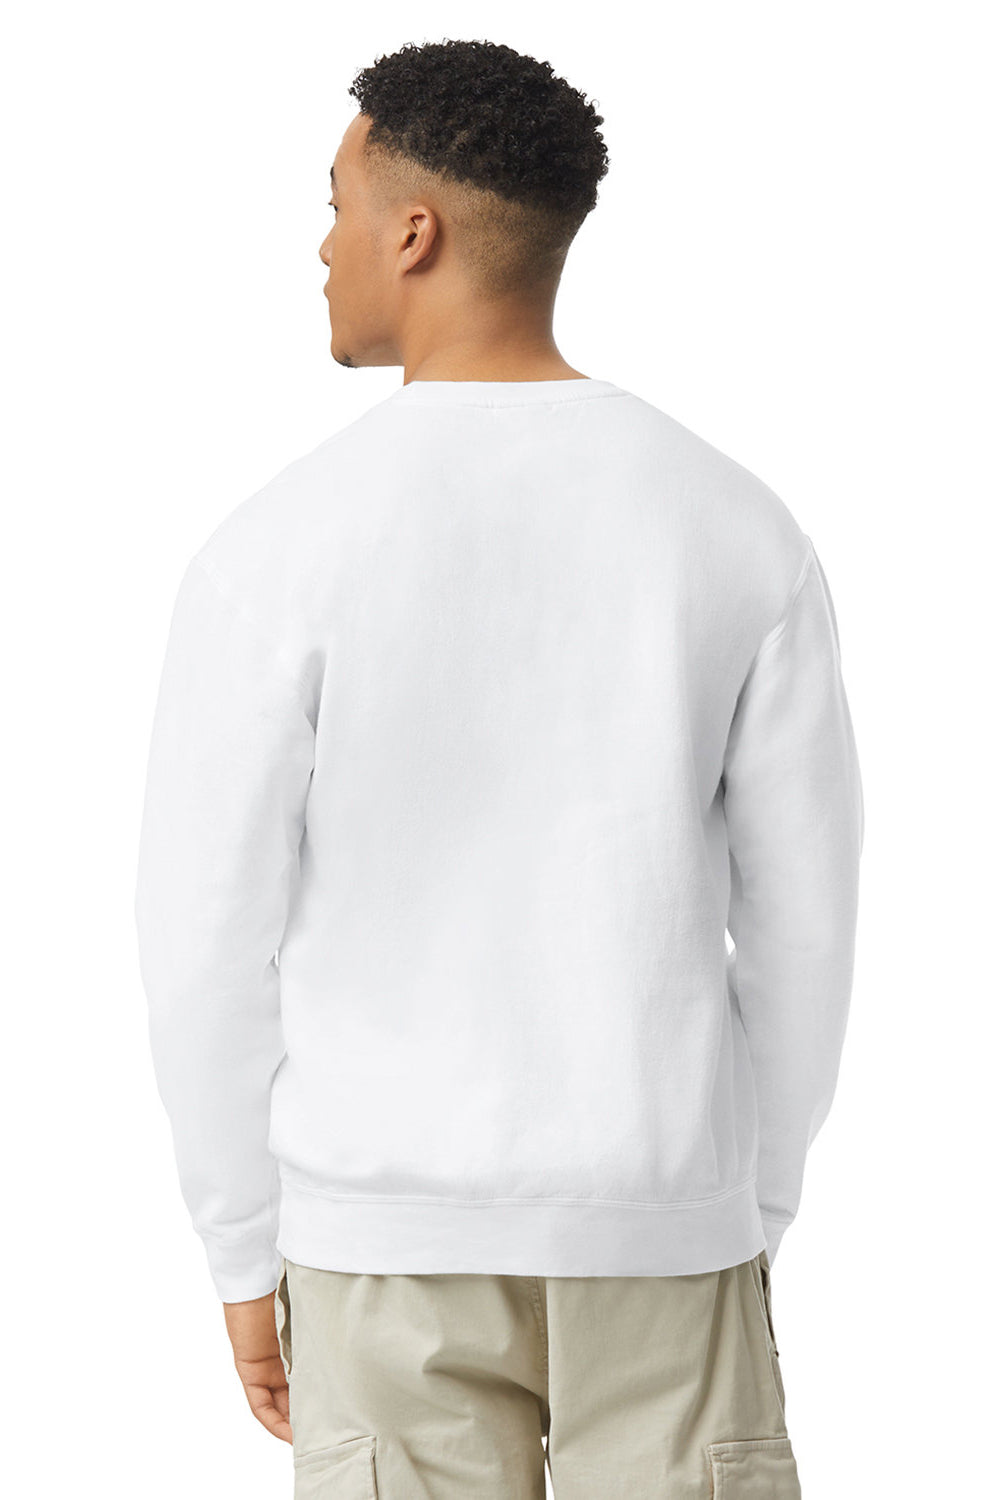 Comfort Colors 1466 Mens Garment Dyed Fleece Crewneck Sweatshirt White Model Back